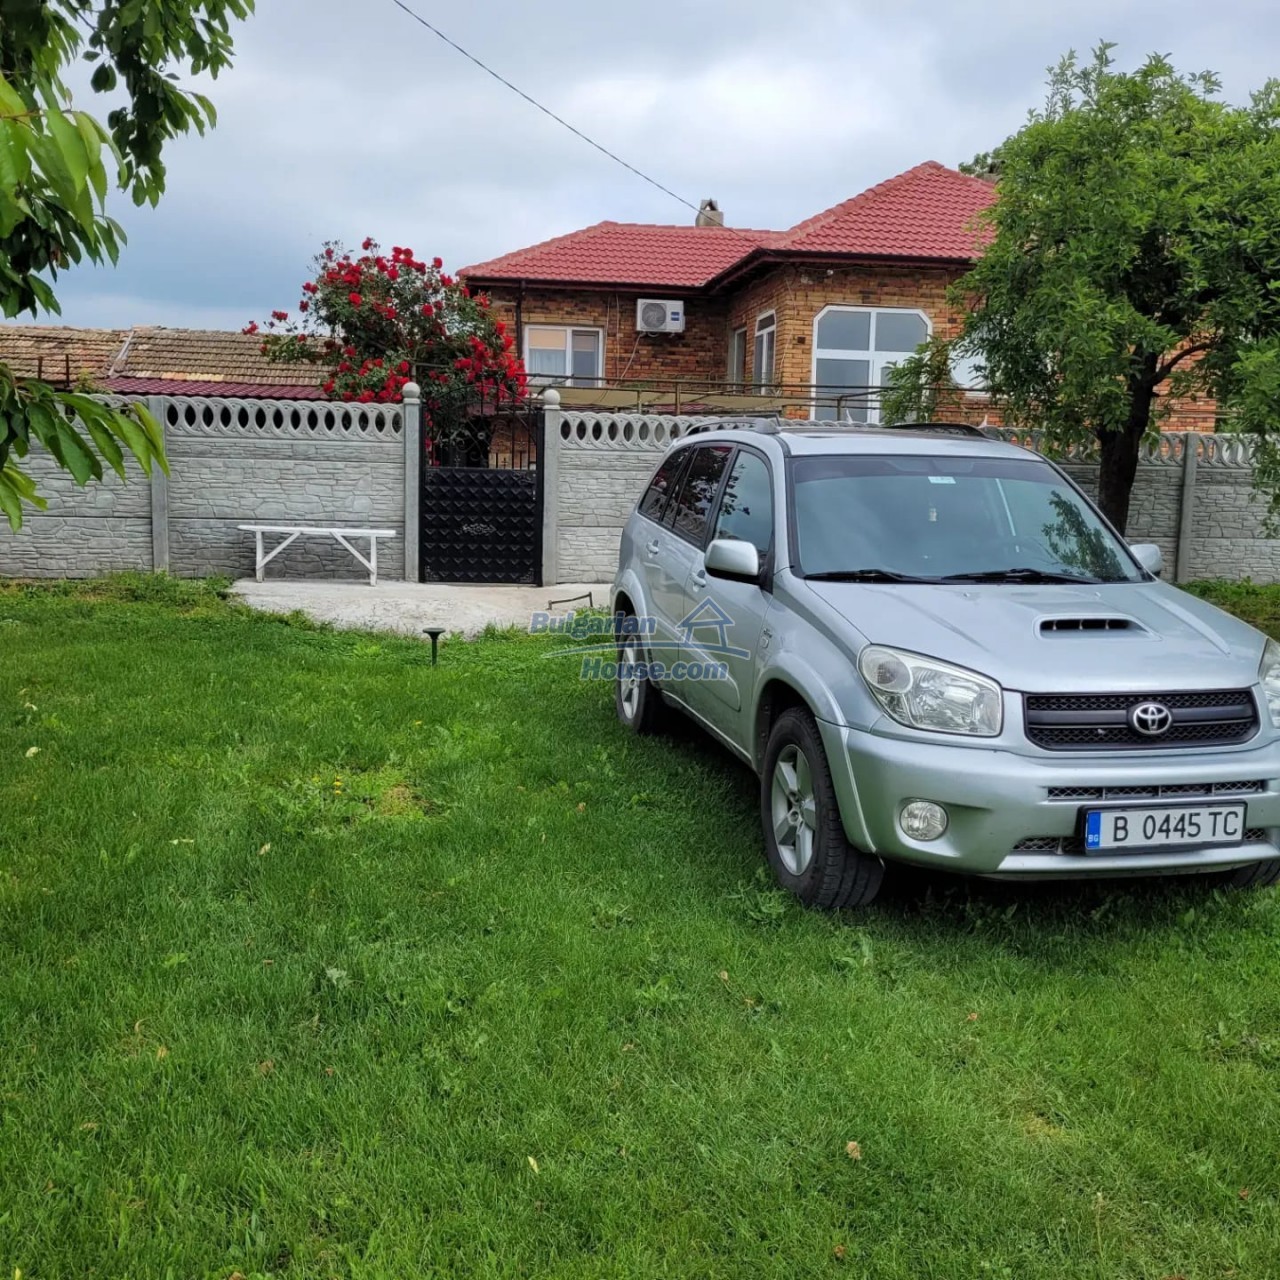 14022:7 - BULGARIAN renovated house with yard 3263 sq.m. 60km to  Varna